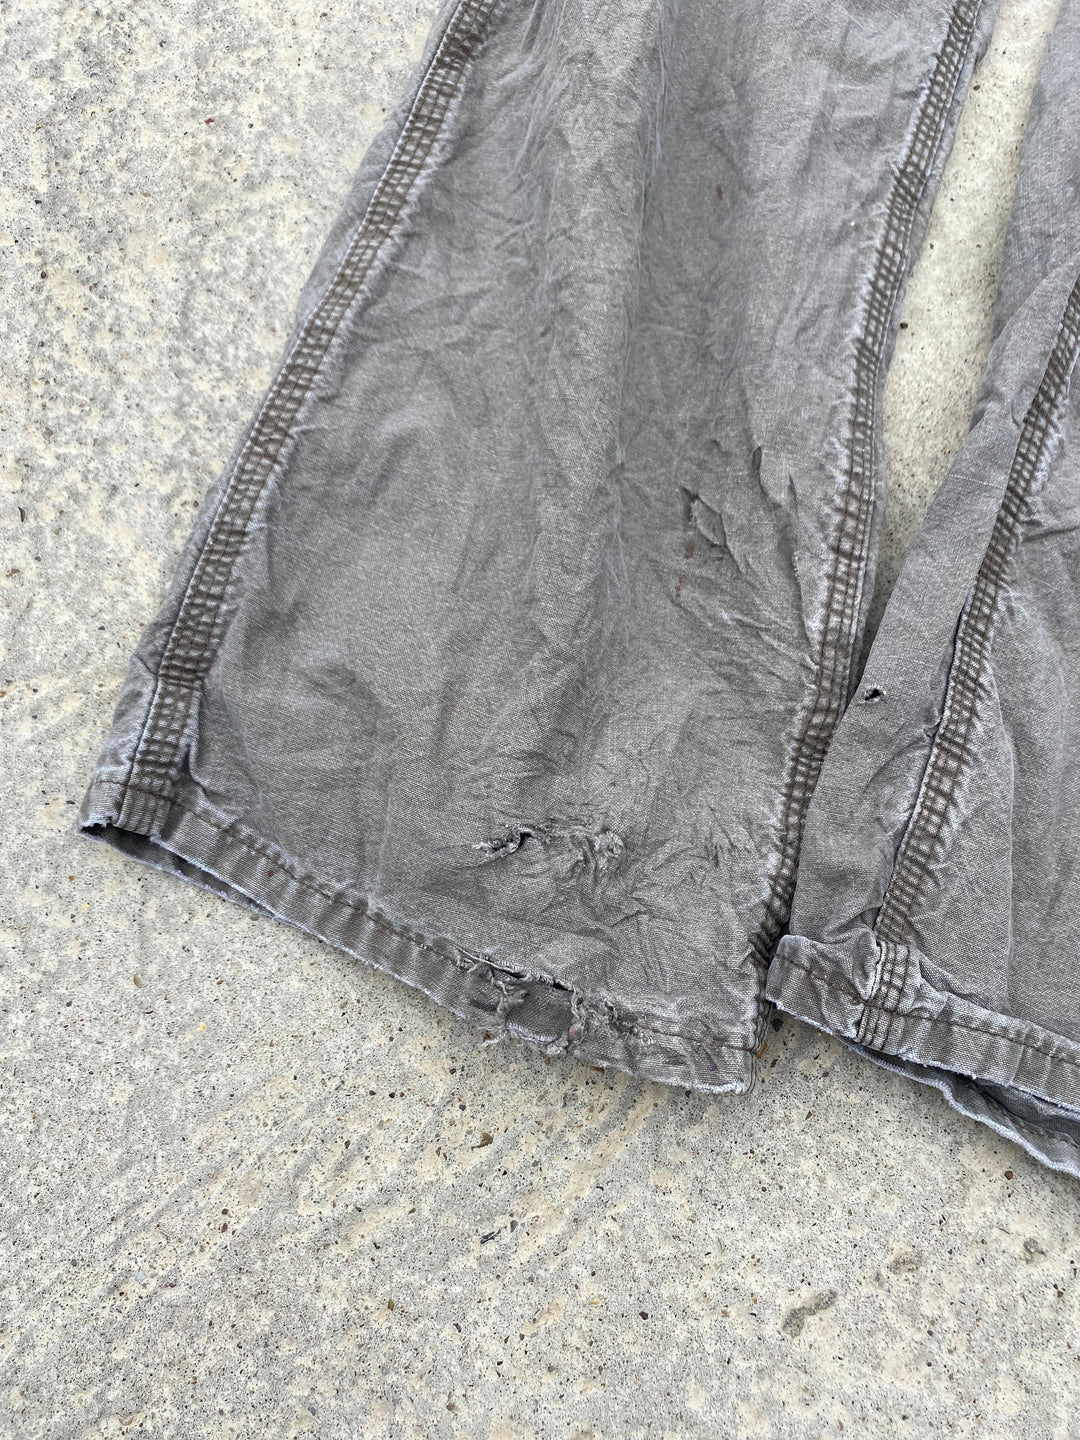 10 x Carhartt Trousers - B-Grade